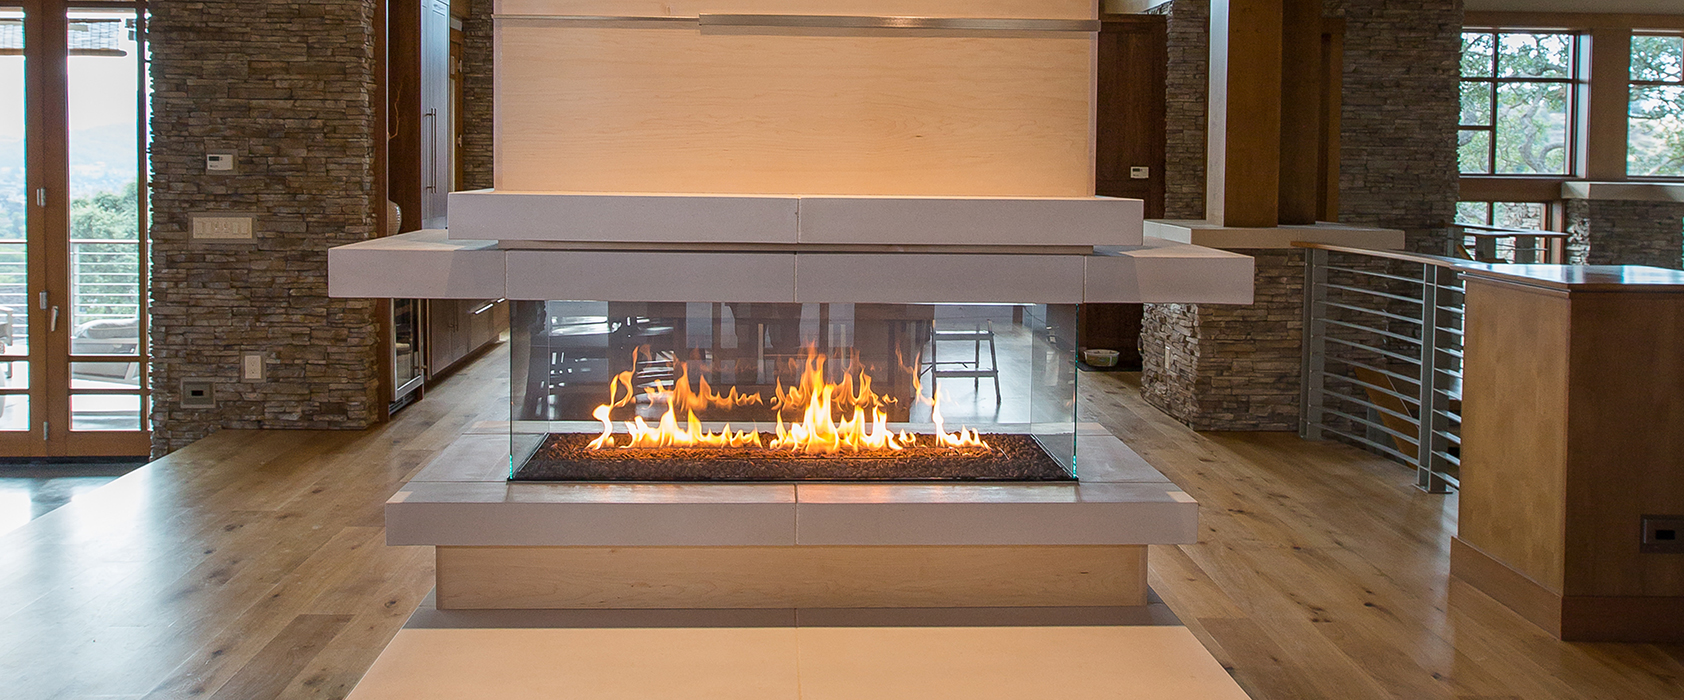 beautiful four sided custom fireplace